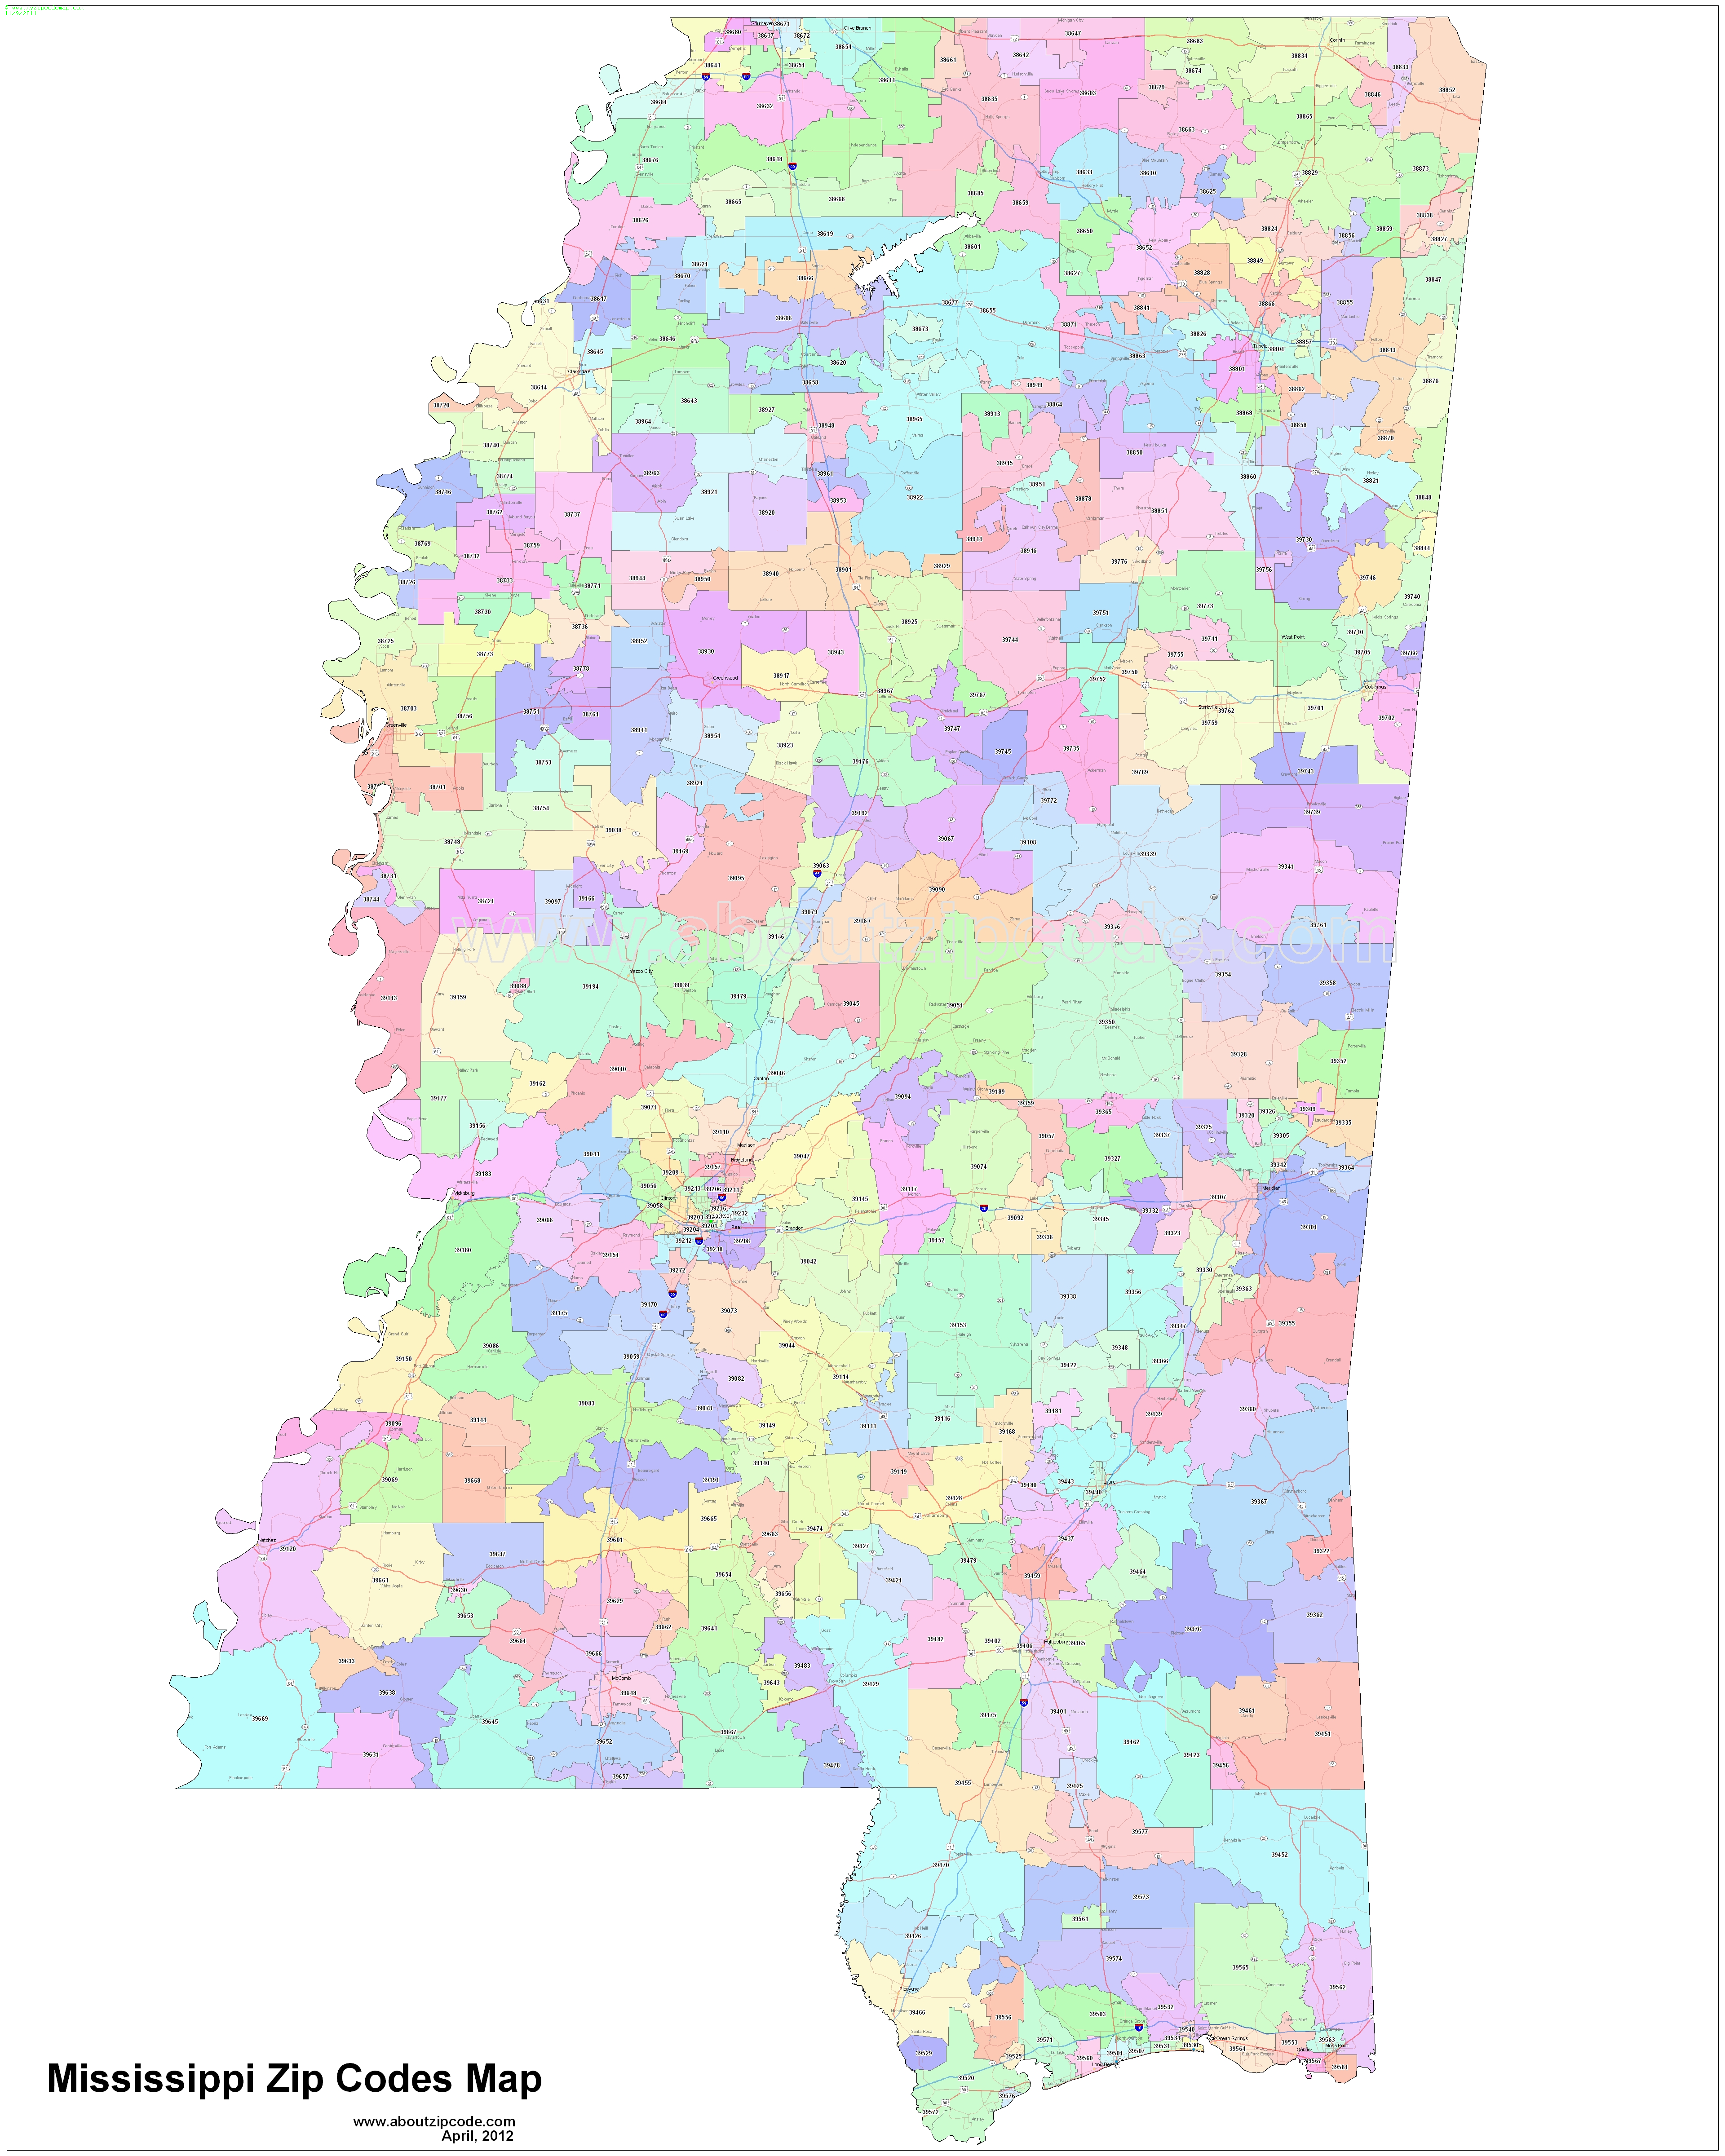 Mississippi Zip Code Maps Free Mississippi Zip Code Maps